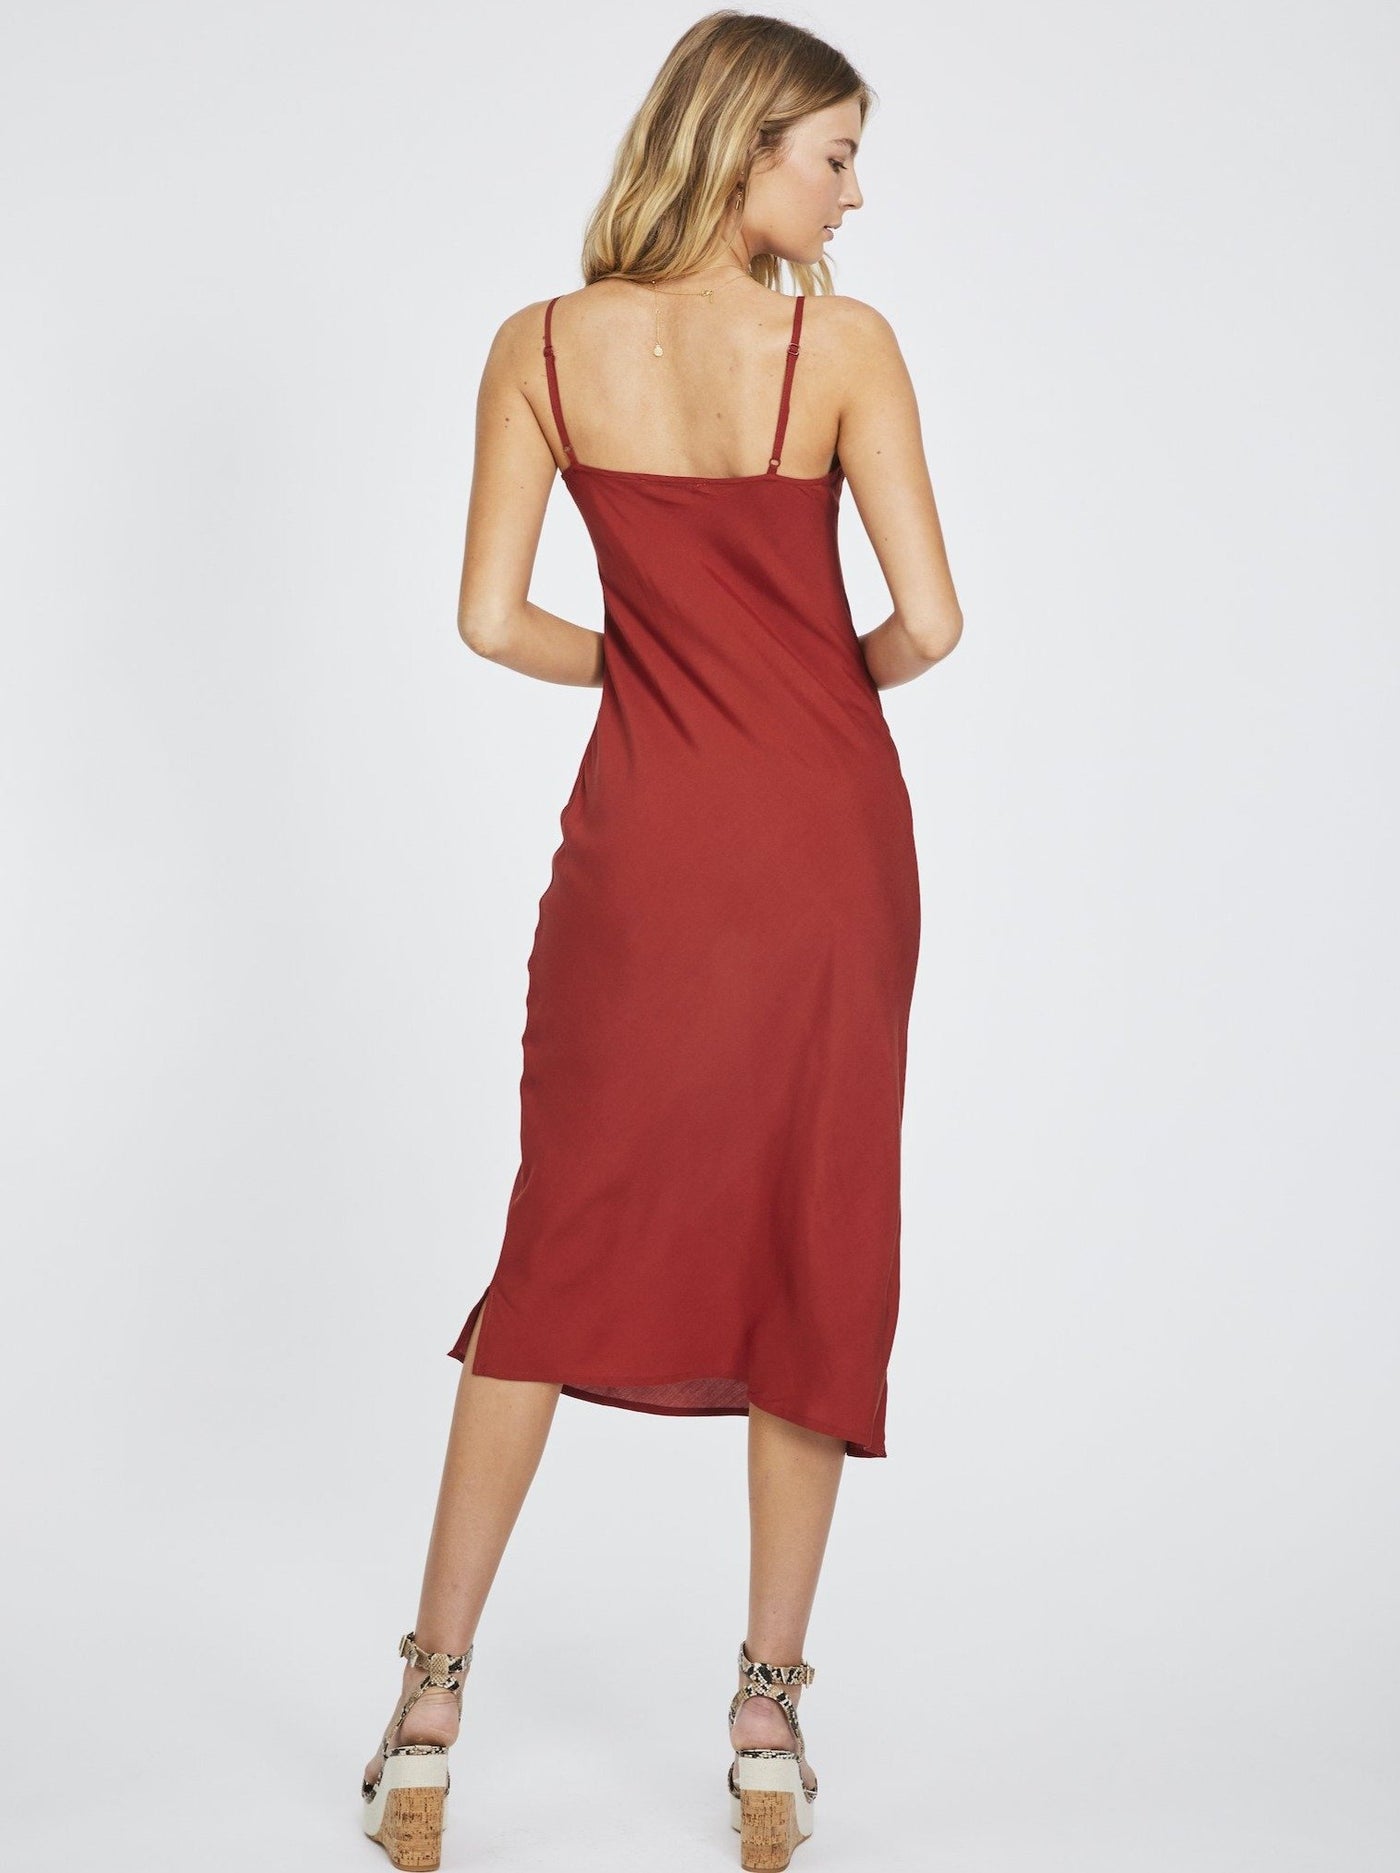 Brick Bias Cut slip dress, Midi Length, Adjustable Straps, Side Splits (5cm), 100% rayon, designed in Australia